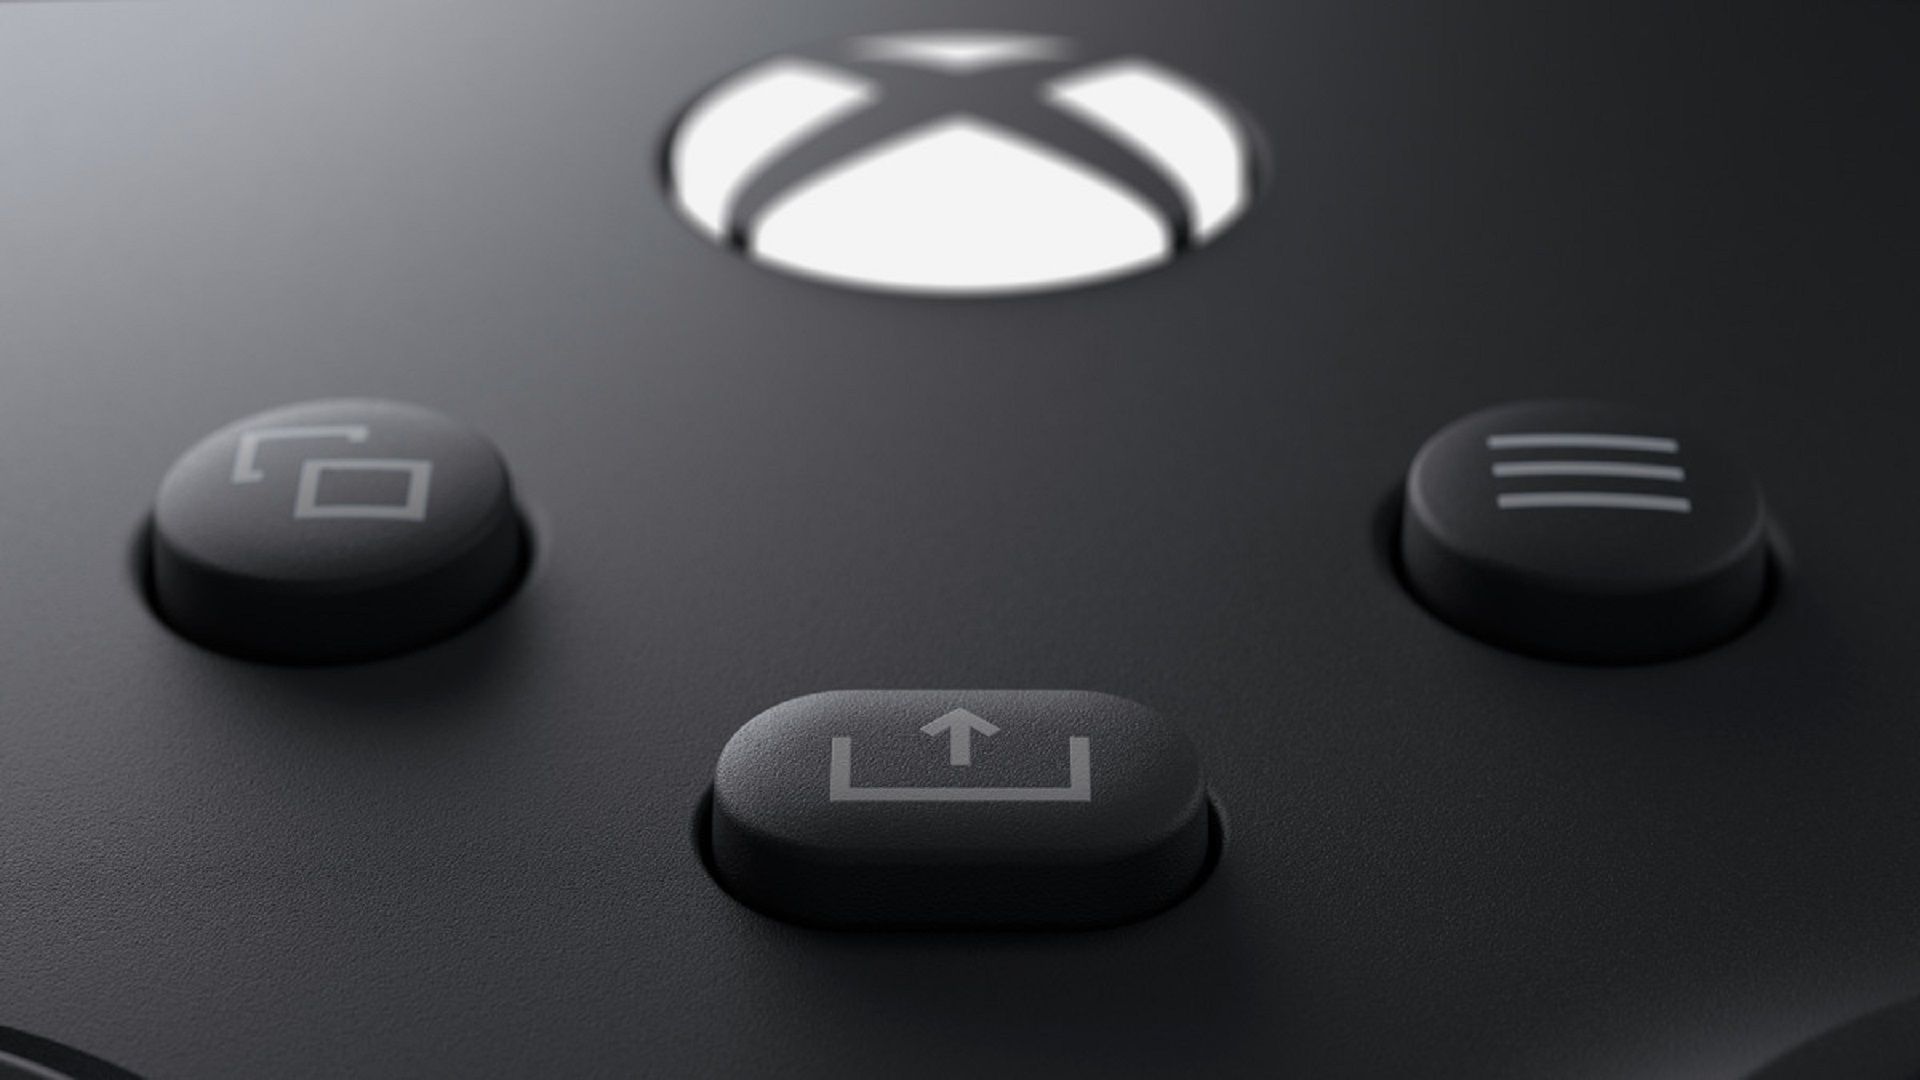 Xbox Game share button photo